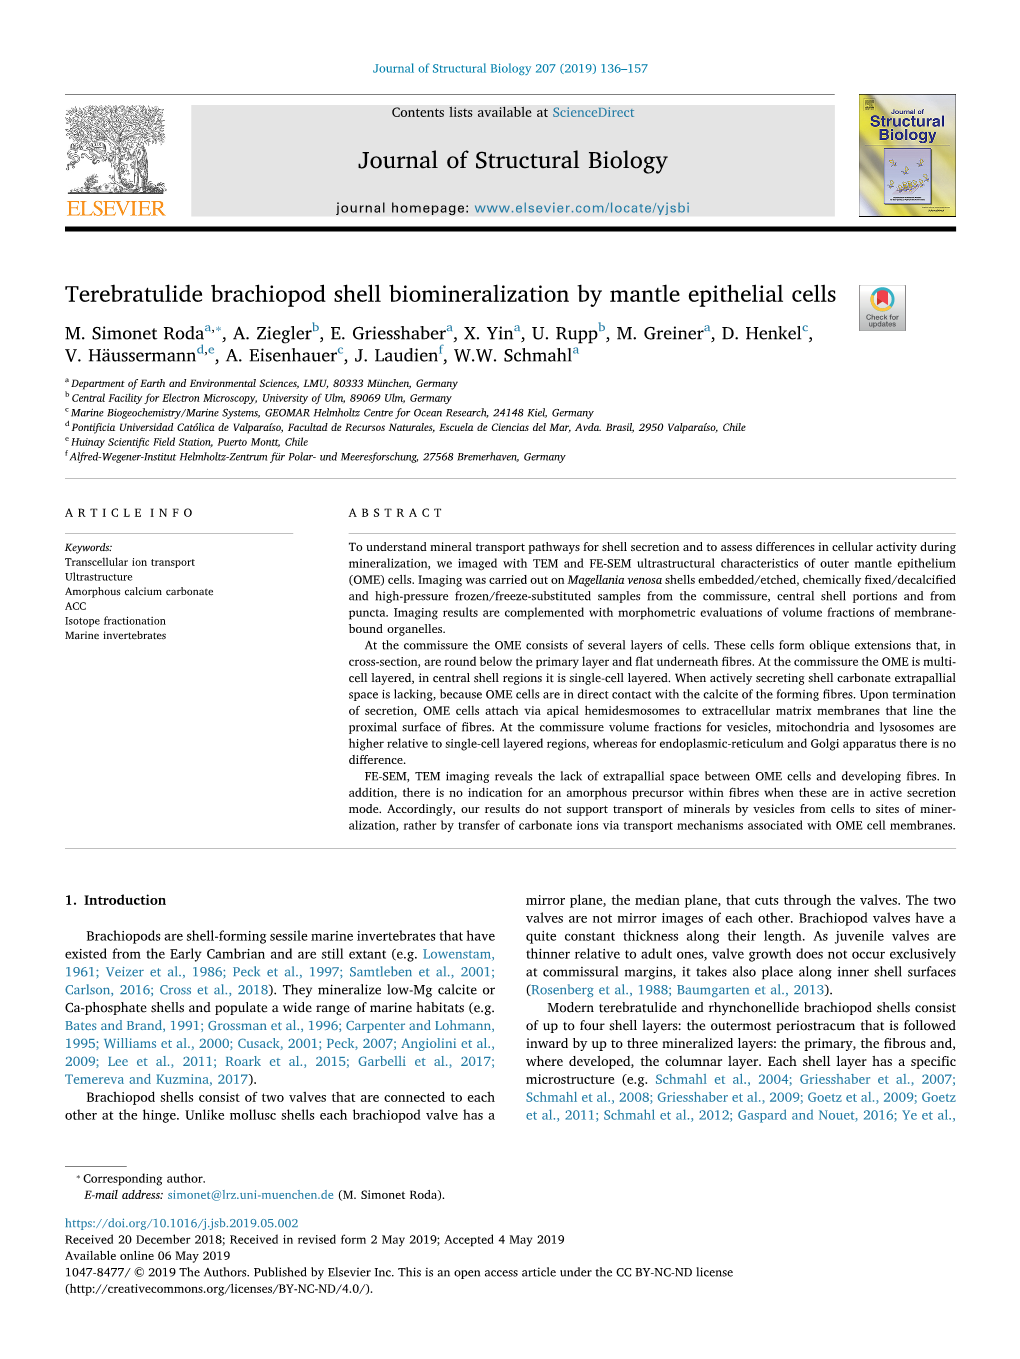 Terebratulide Brachiopod Shell Biomineralization by Mantle Epithelial Cells T ⁎ M